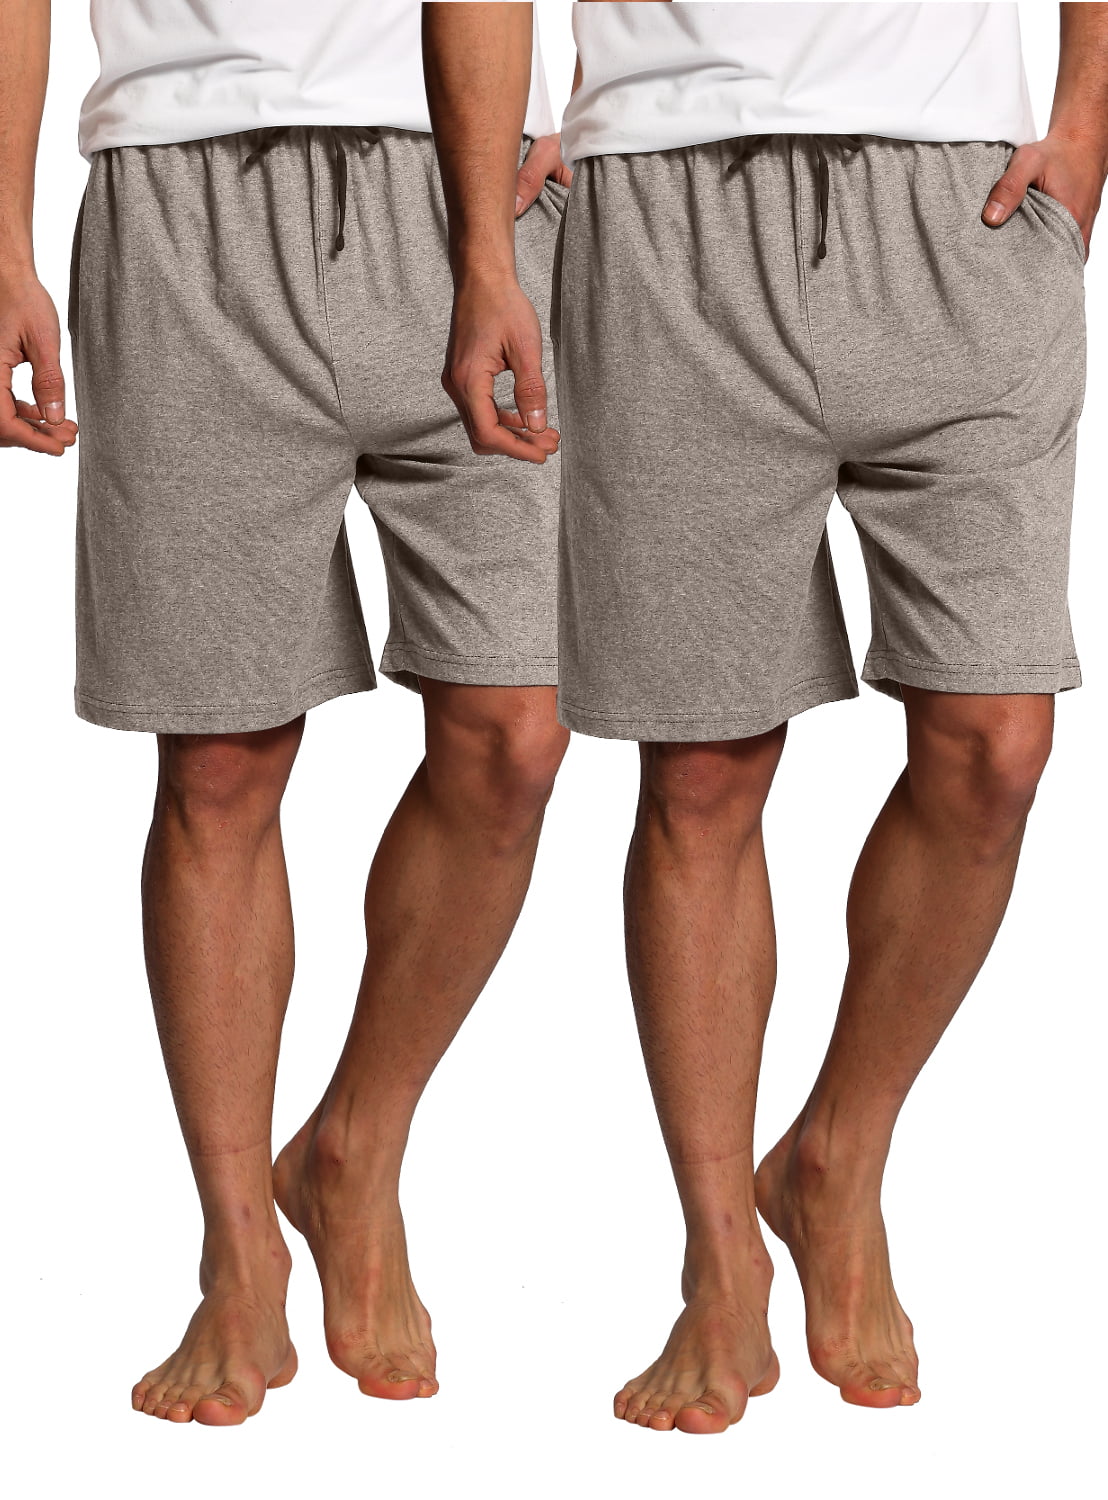 BYWX-Men Summer Cotton Lounge Drawstring Waist Knit Shorts Sleepwear